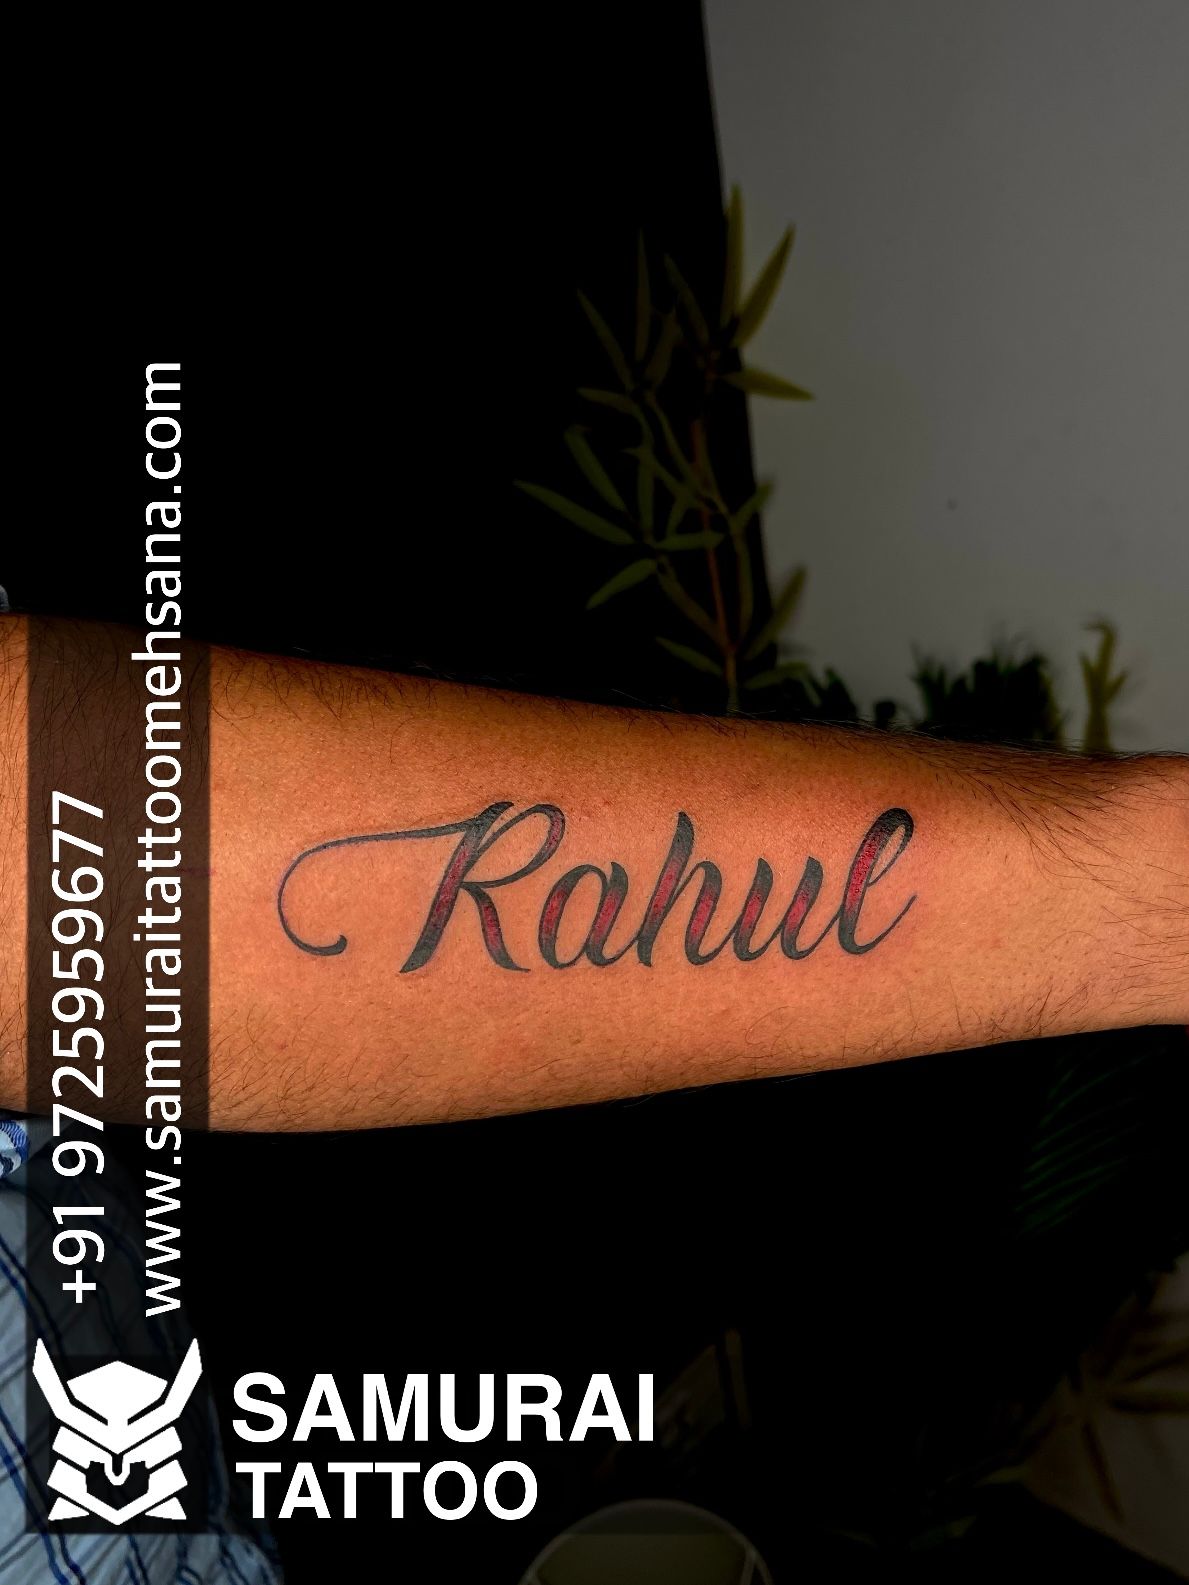 Name tattoo  Rahul name tattoo  Name tattoo Name tattoo designs  Tattoos